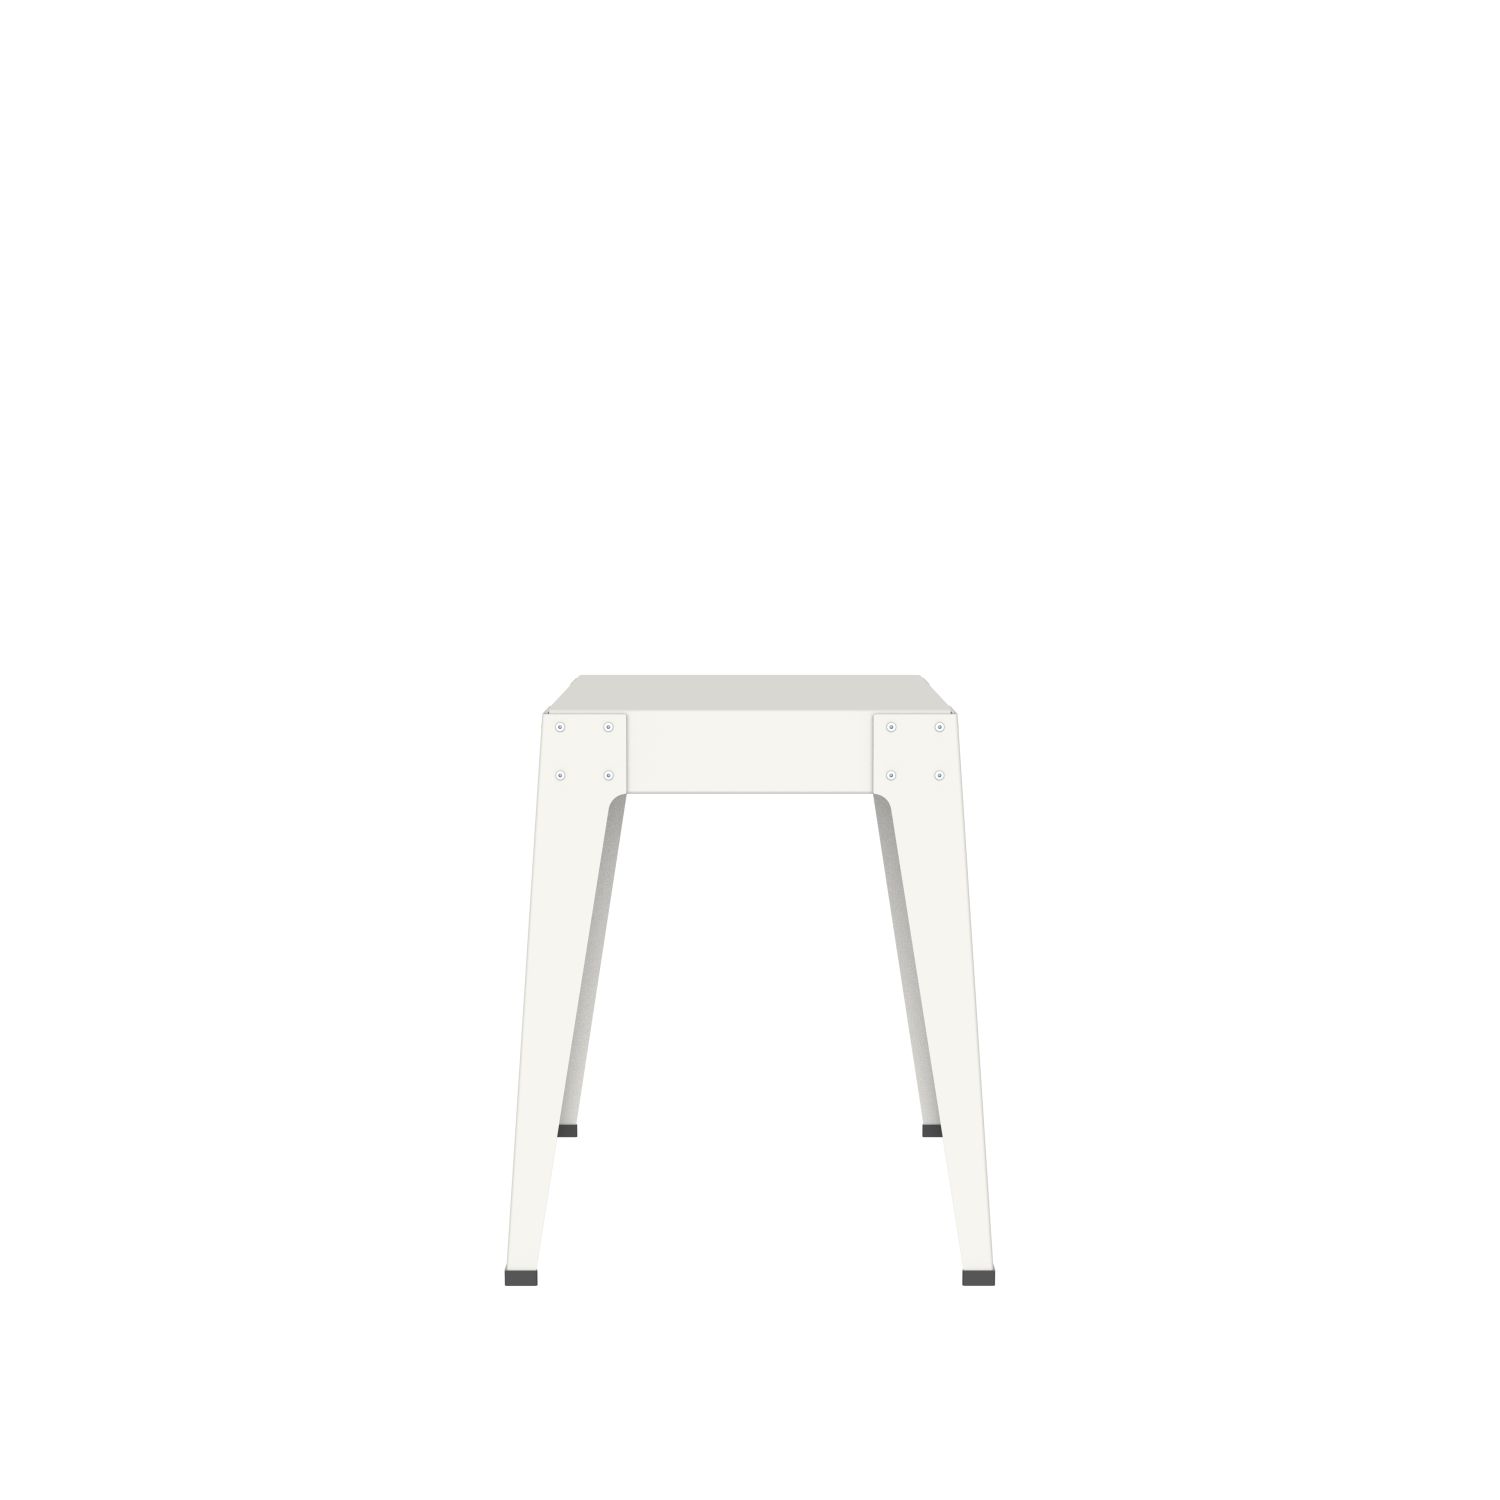 lensvelt piet hein eek aluminium series stool white ral9010 soft leg ends